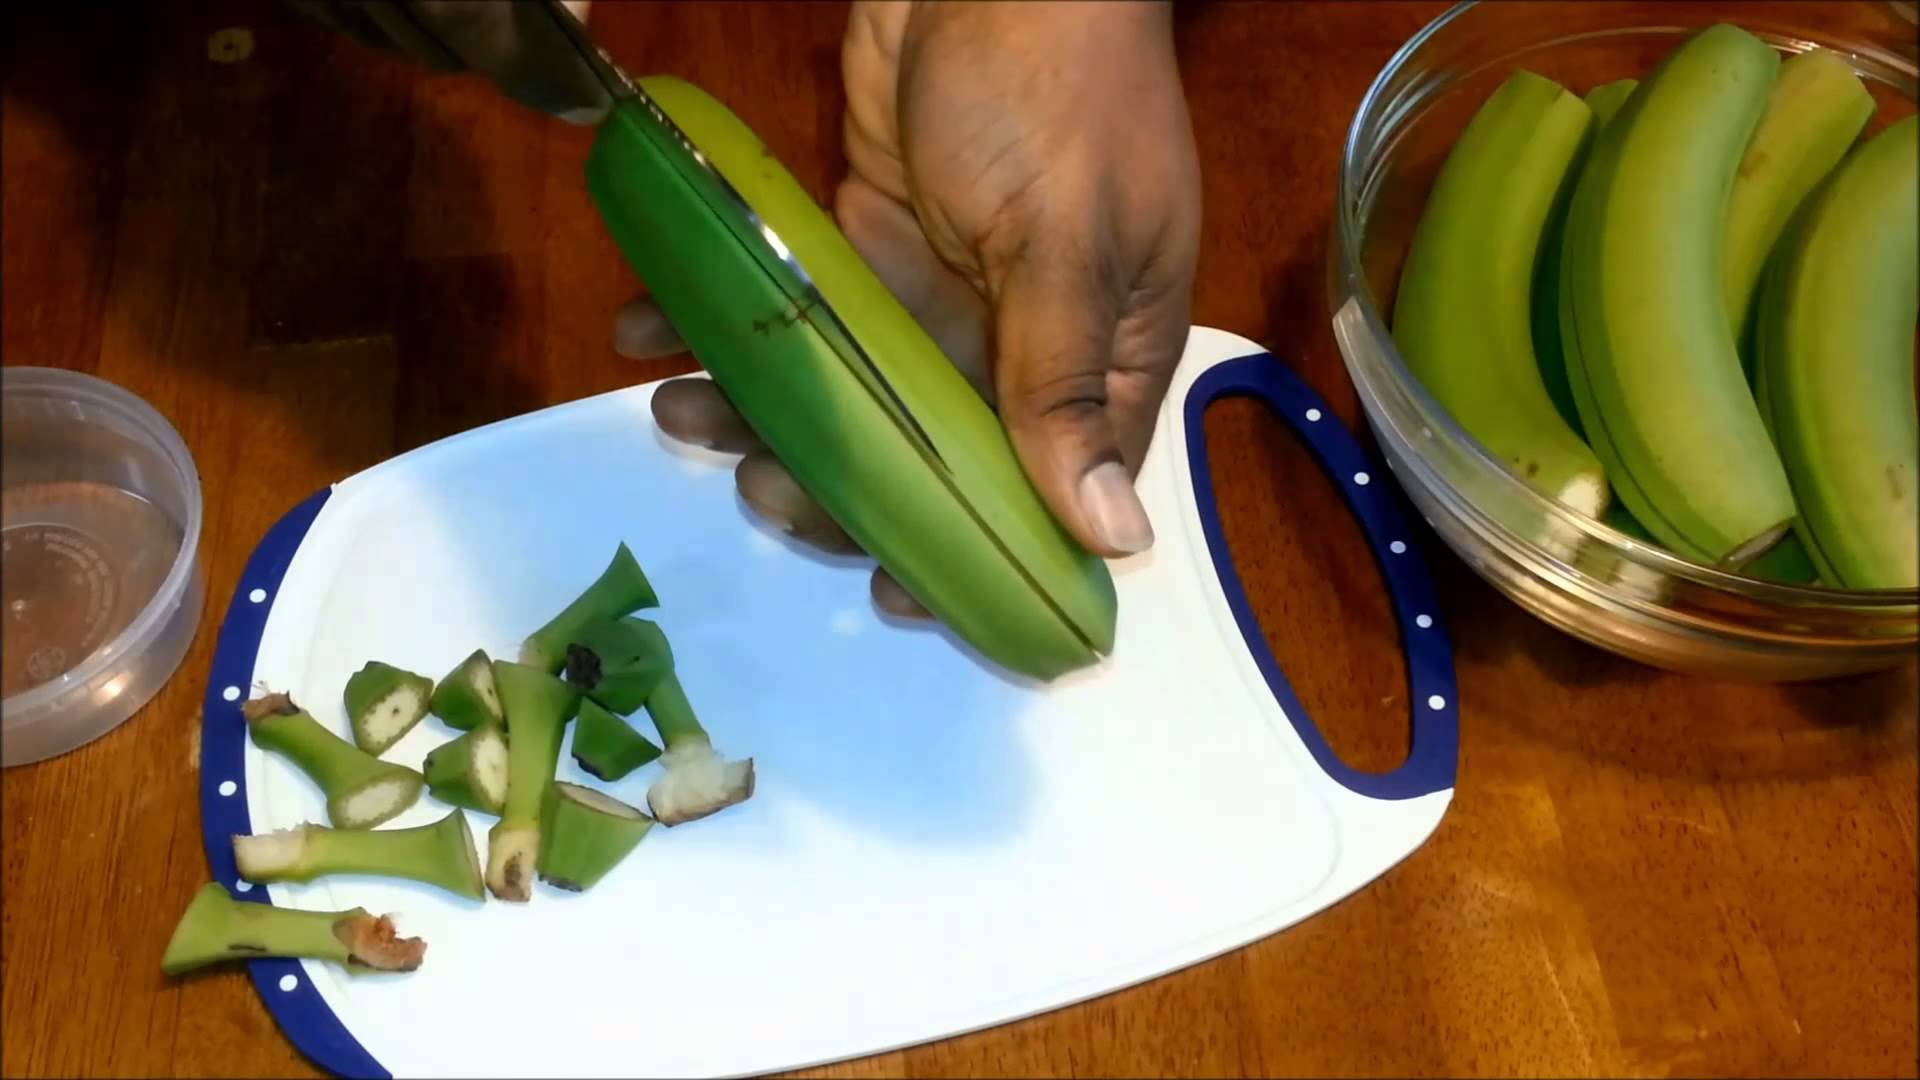 How To Cook Green Banana - YouTube